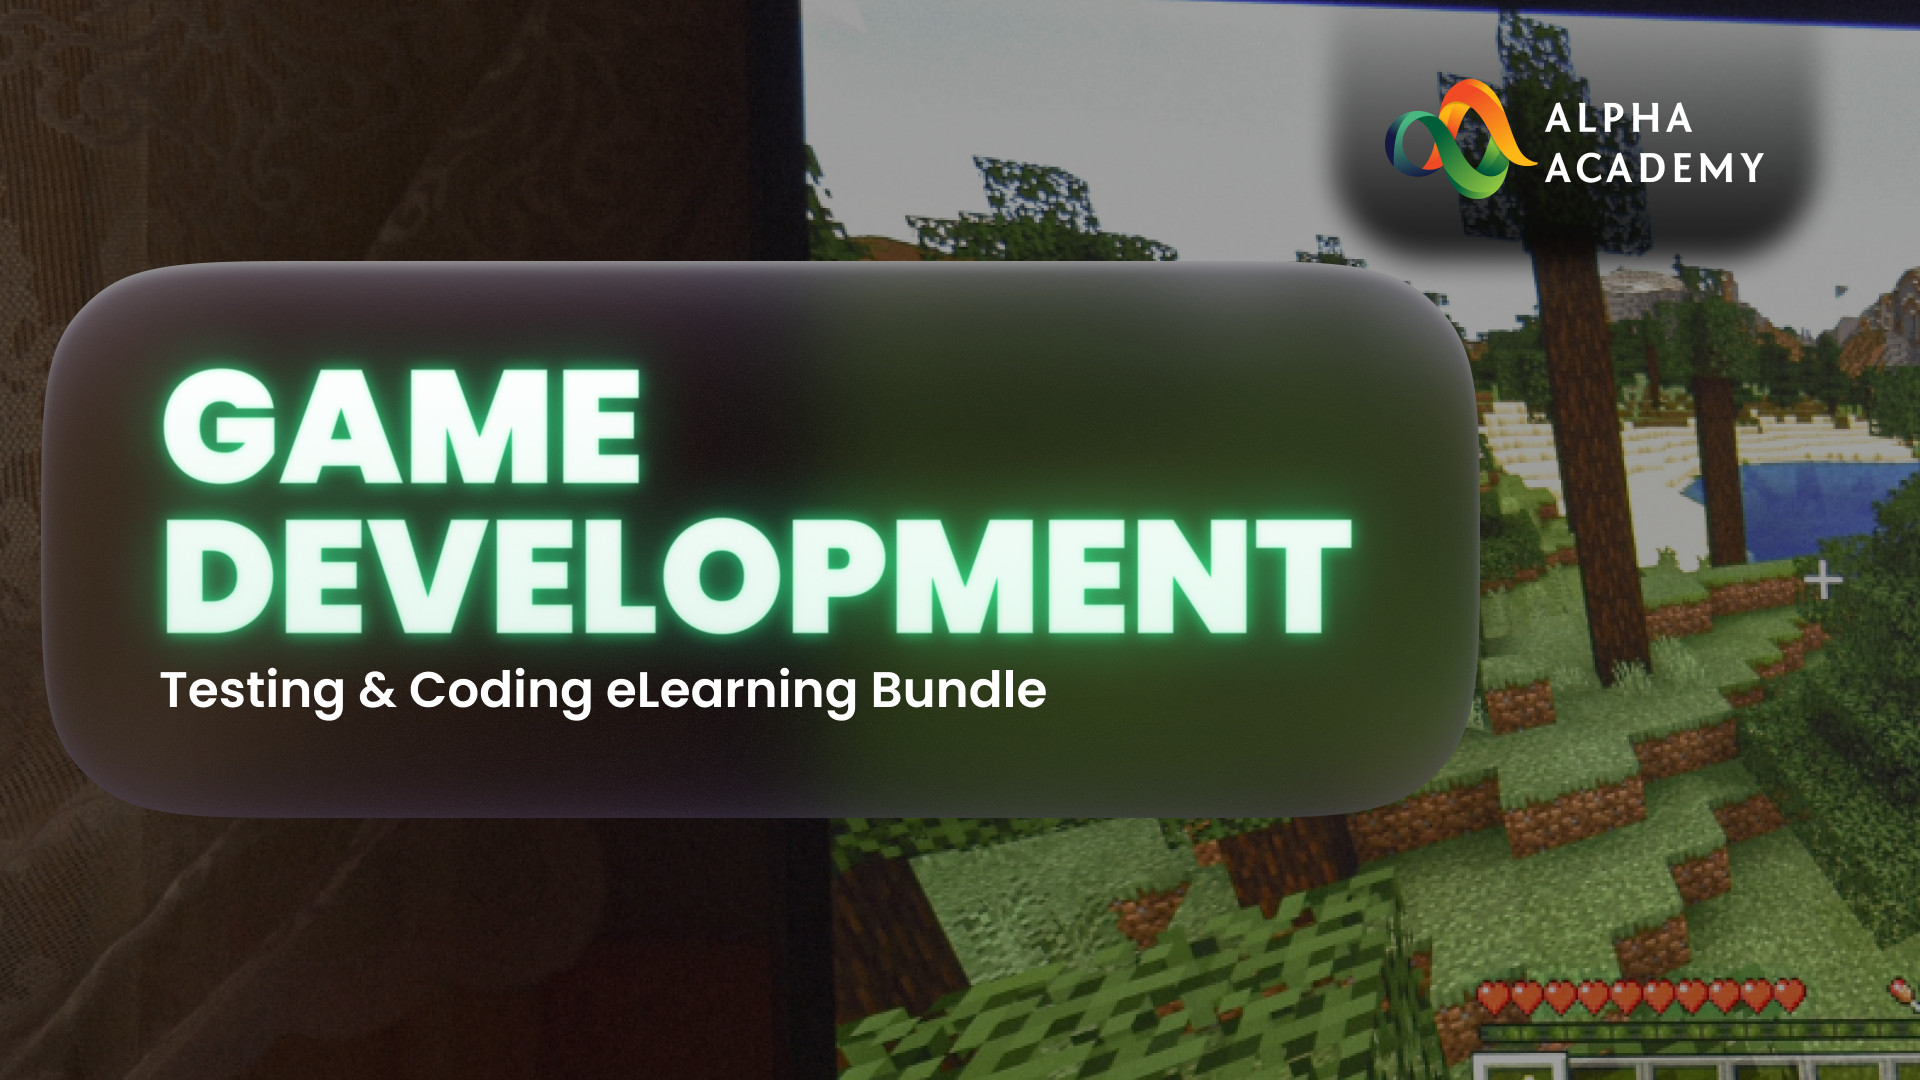 Game Development, Testing & Coding eLearning Bundle Alpha Academy Code, $10.19